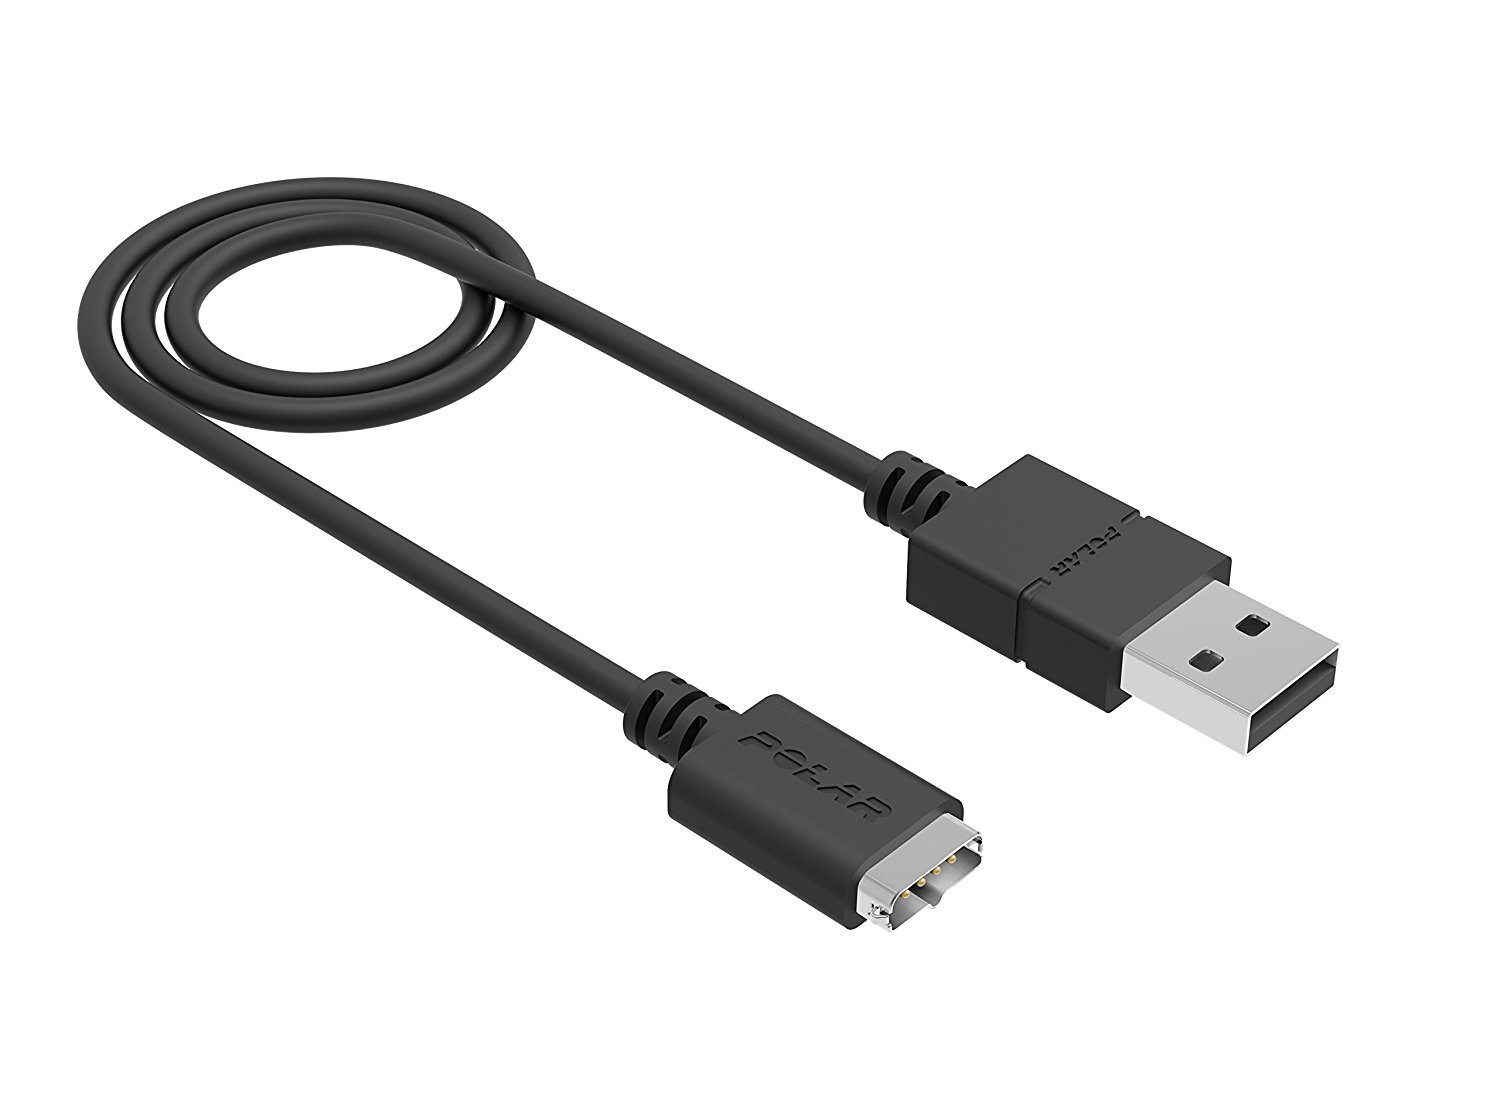 Polar M430 USB Cable